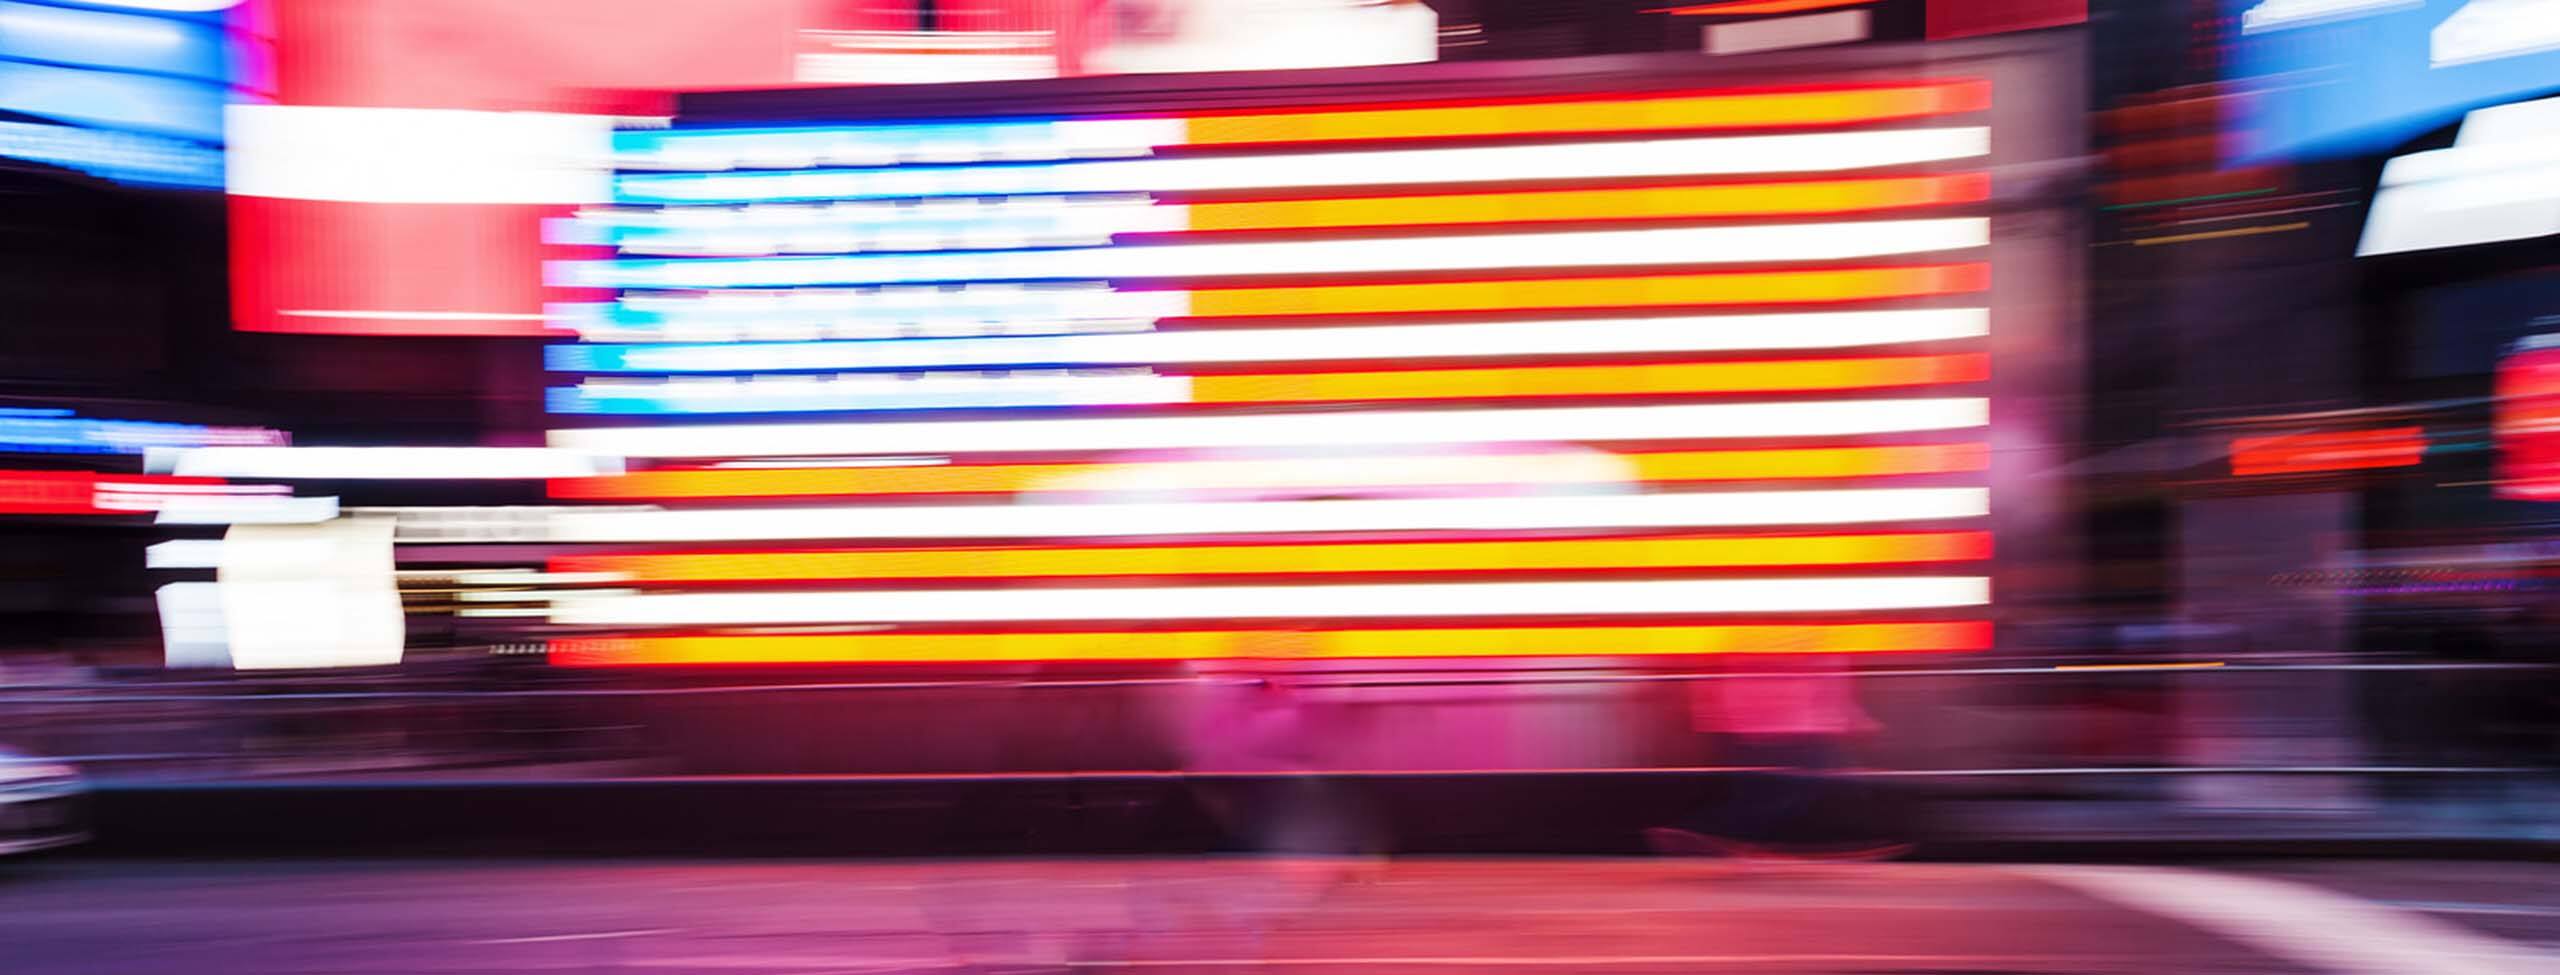 American flag lights